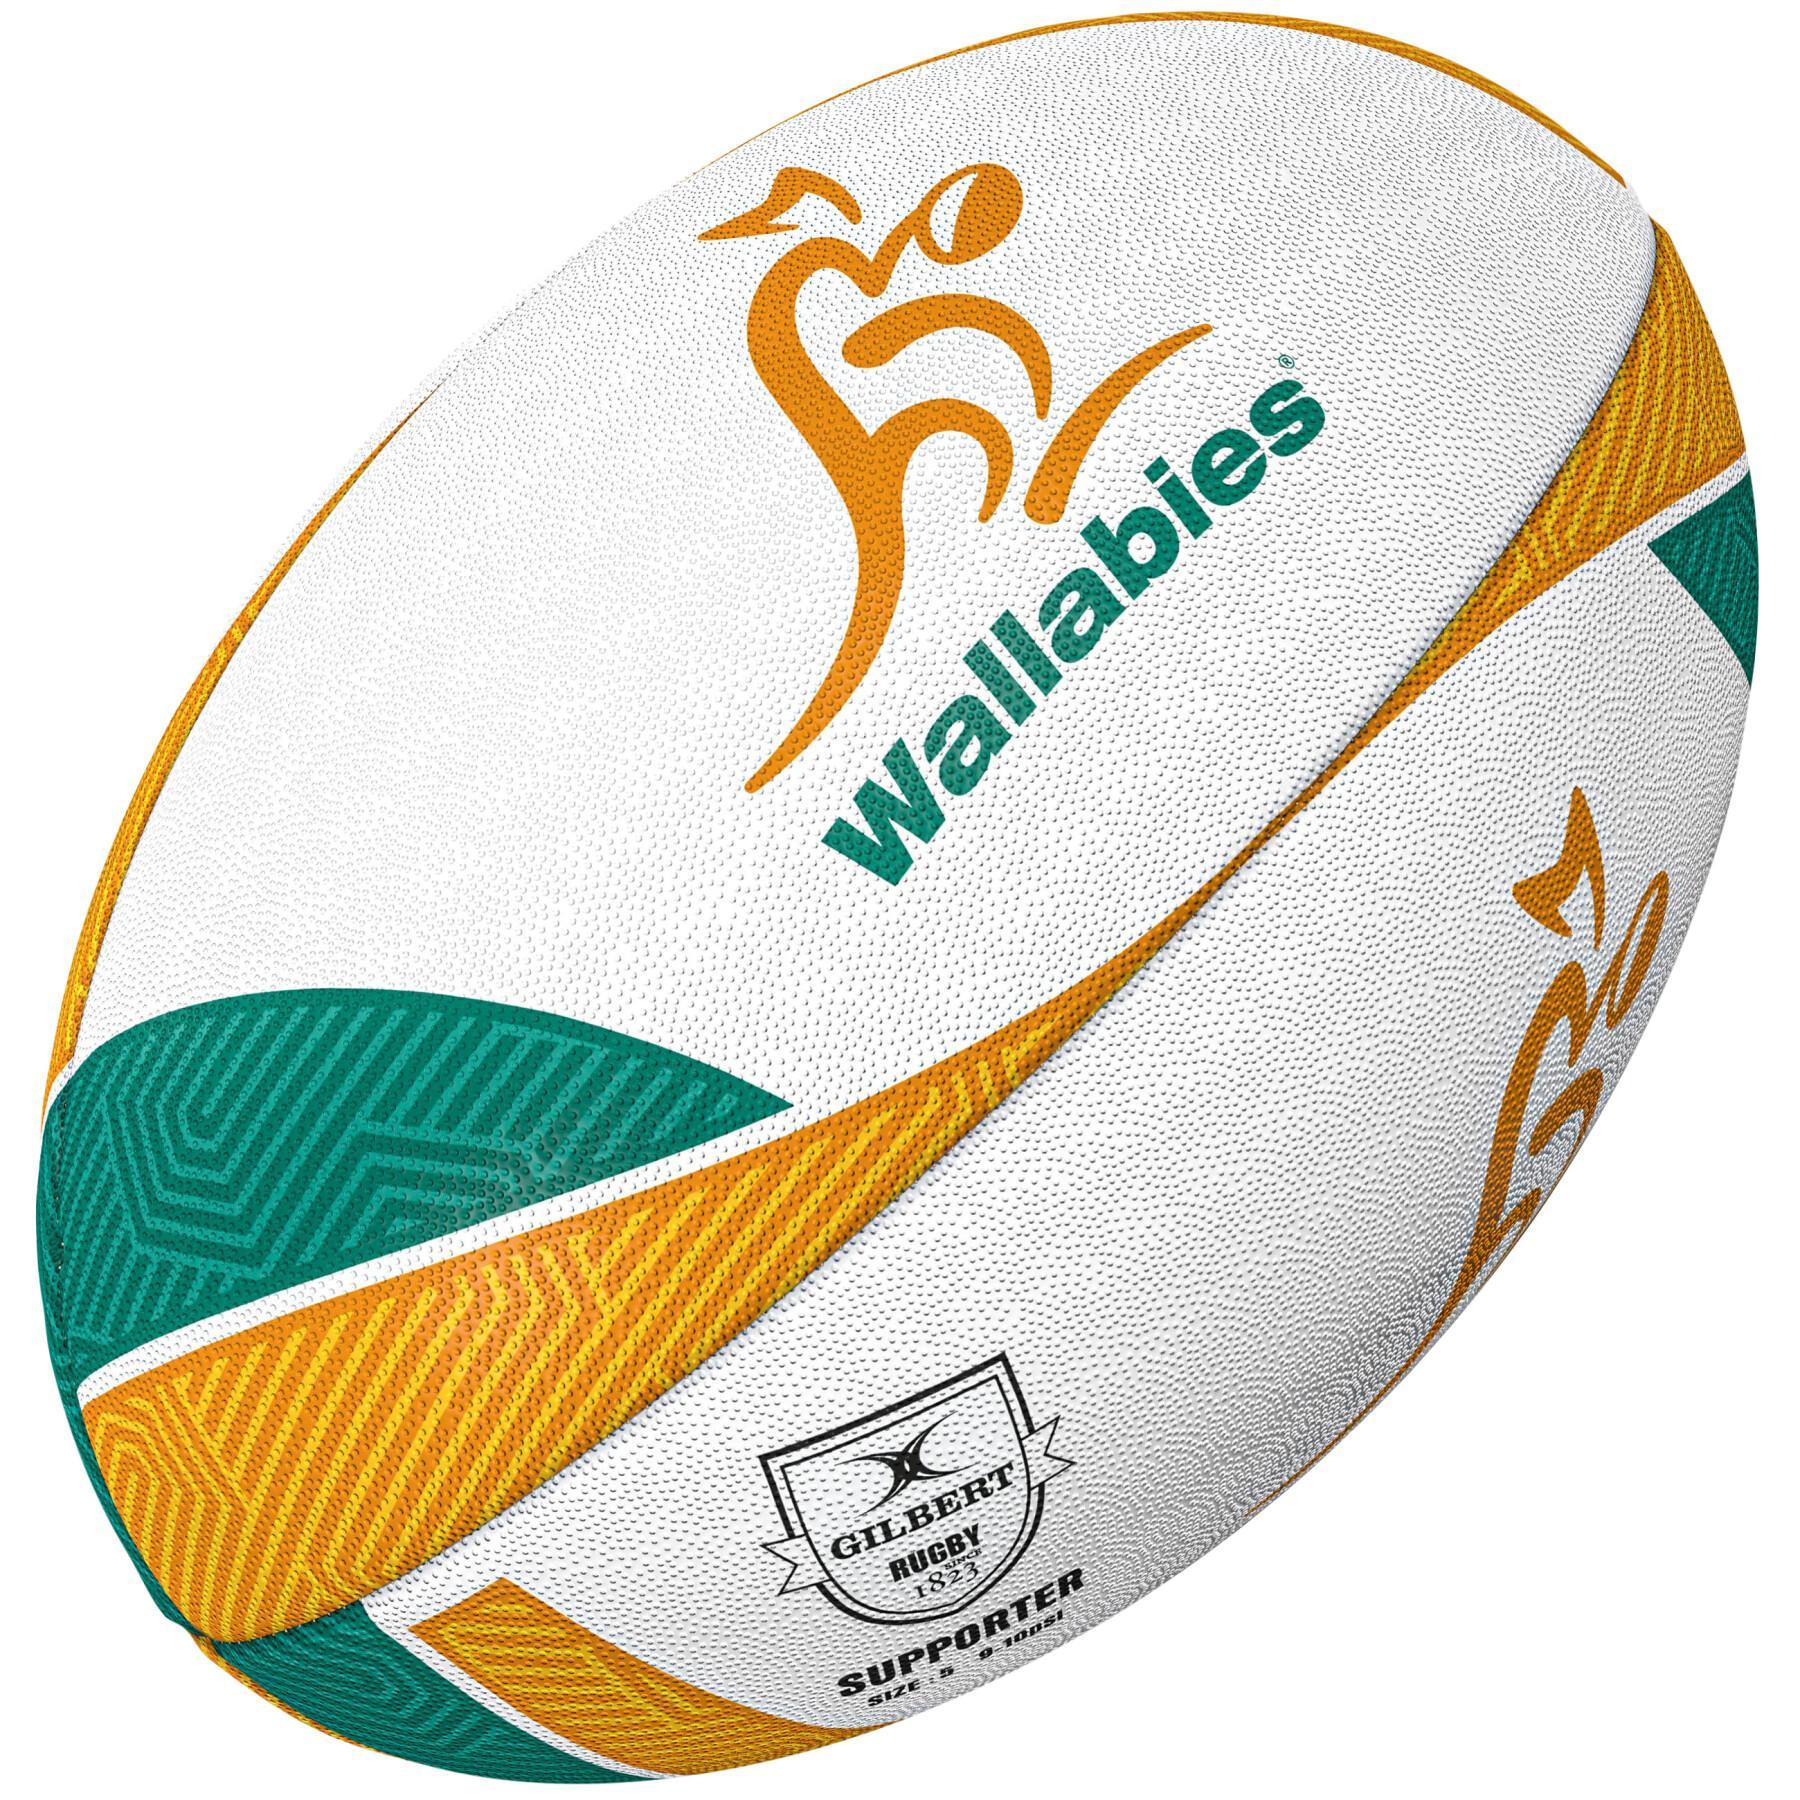 Pallone da rugby Australie Supp